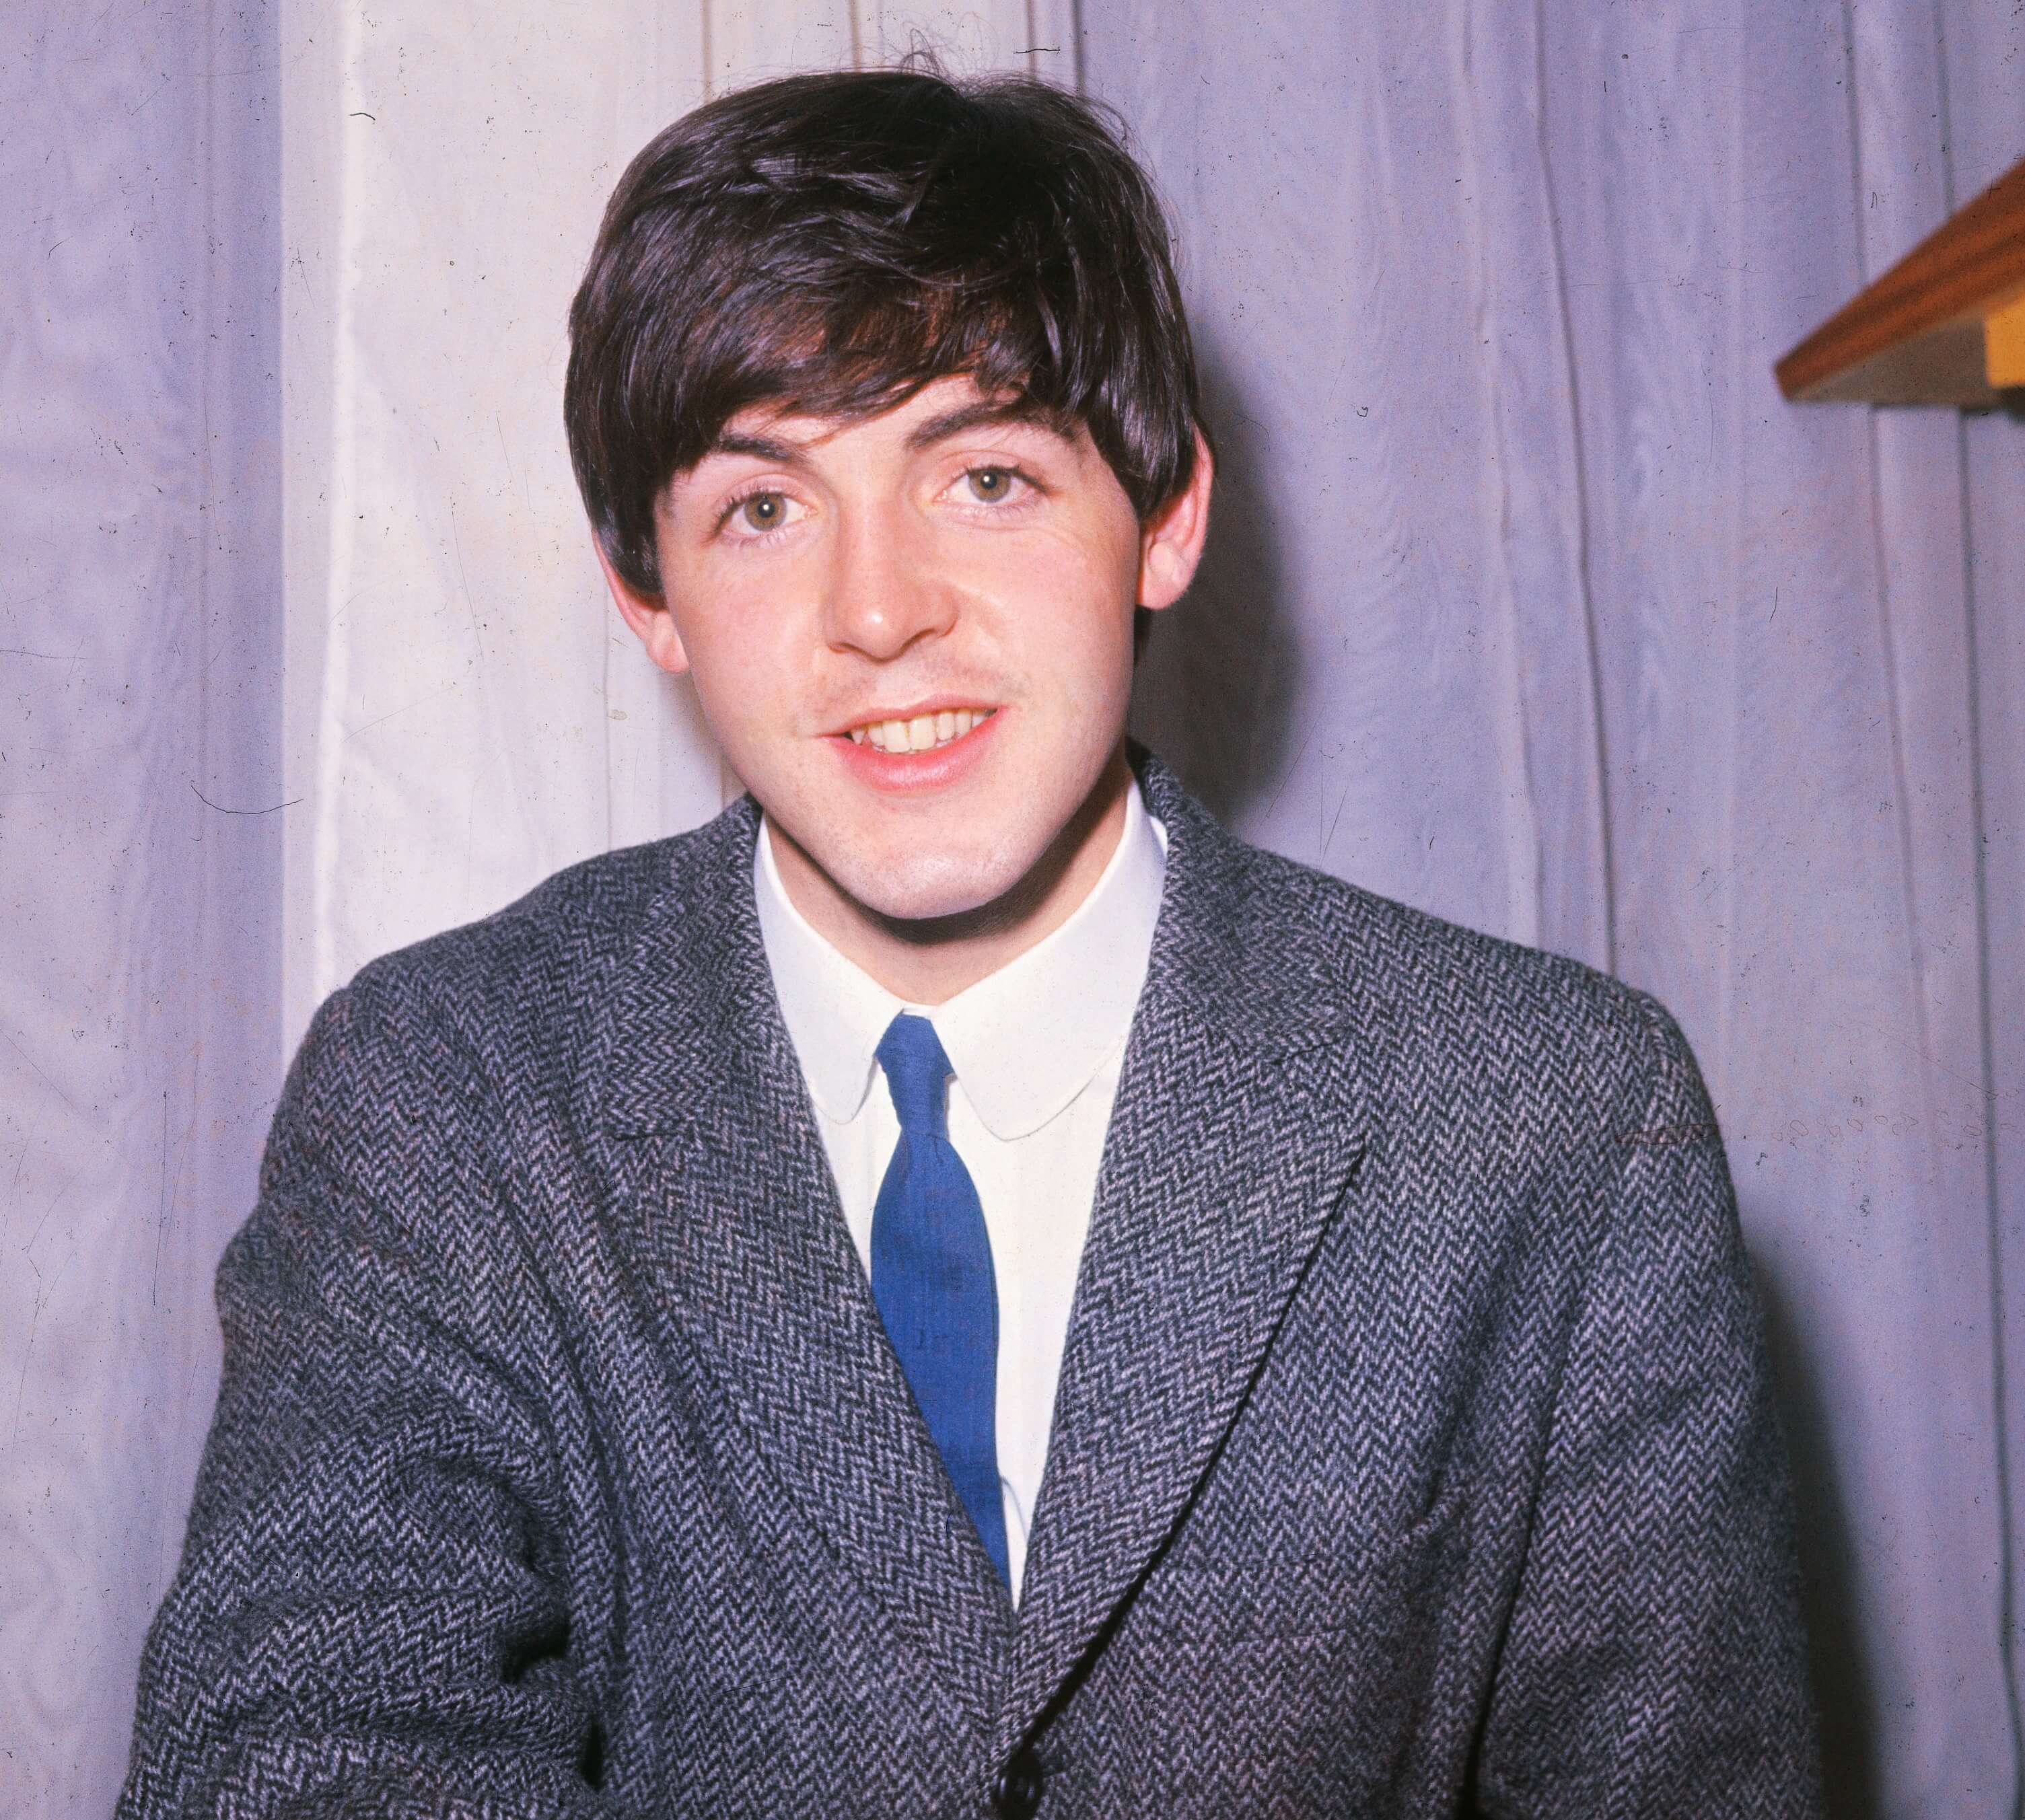 Paul McCartney in a suit during The Beatles' 'White Album' era